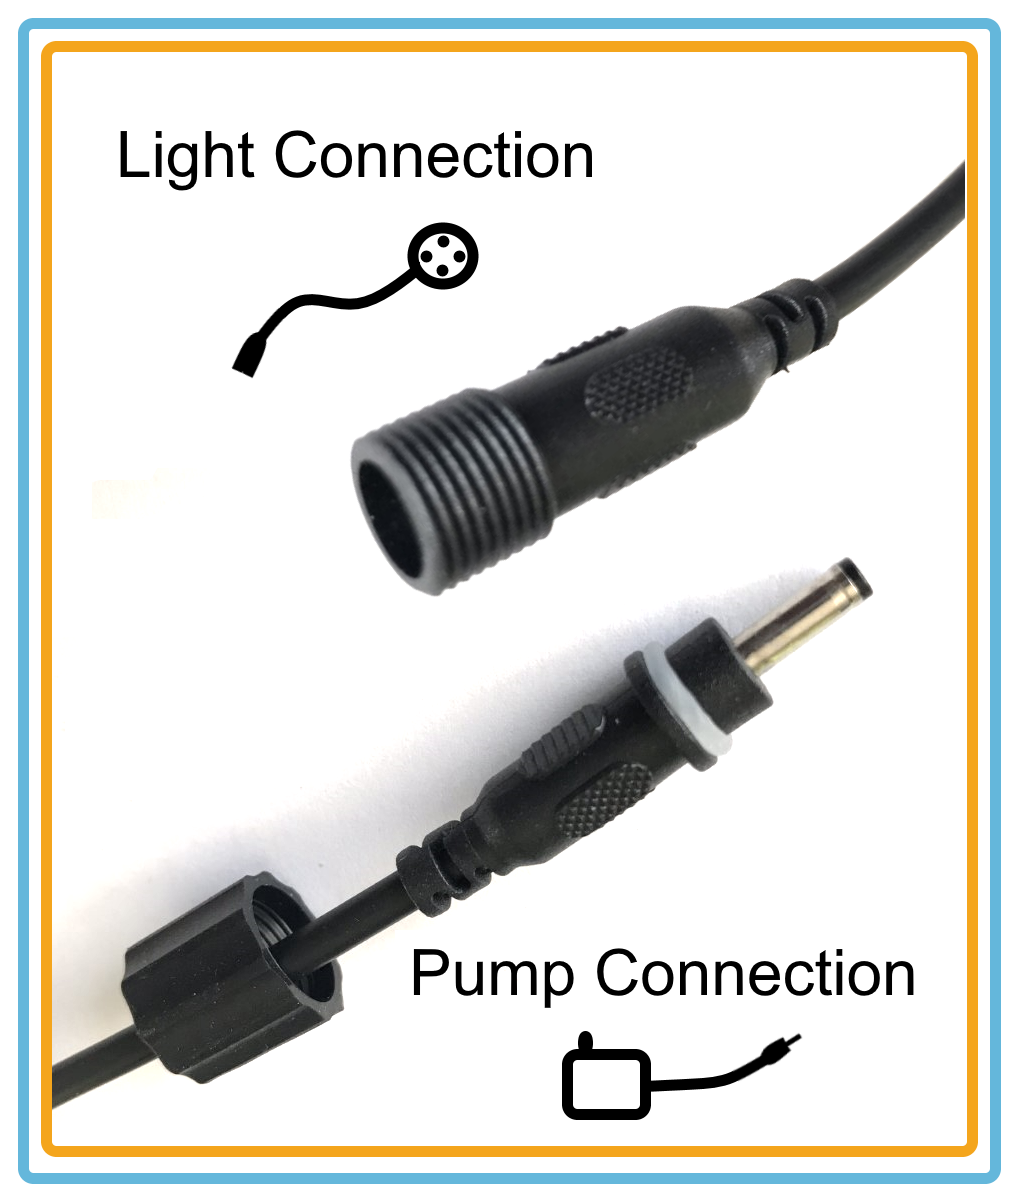 JIER JR-450LV pump-3-light-extension replace with RWJR-450LV-ODL-3EXT ~ LED  Adpts.